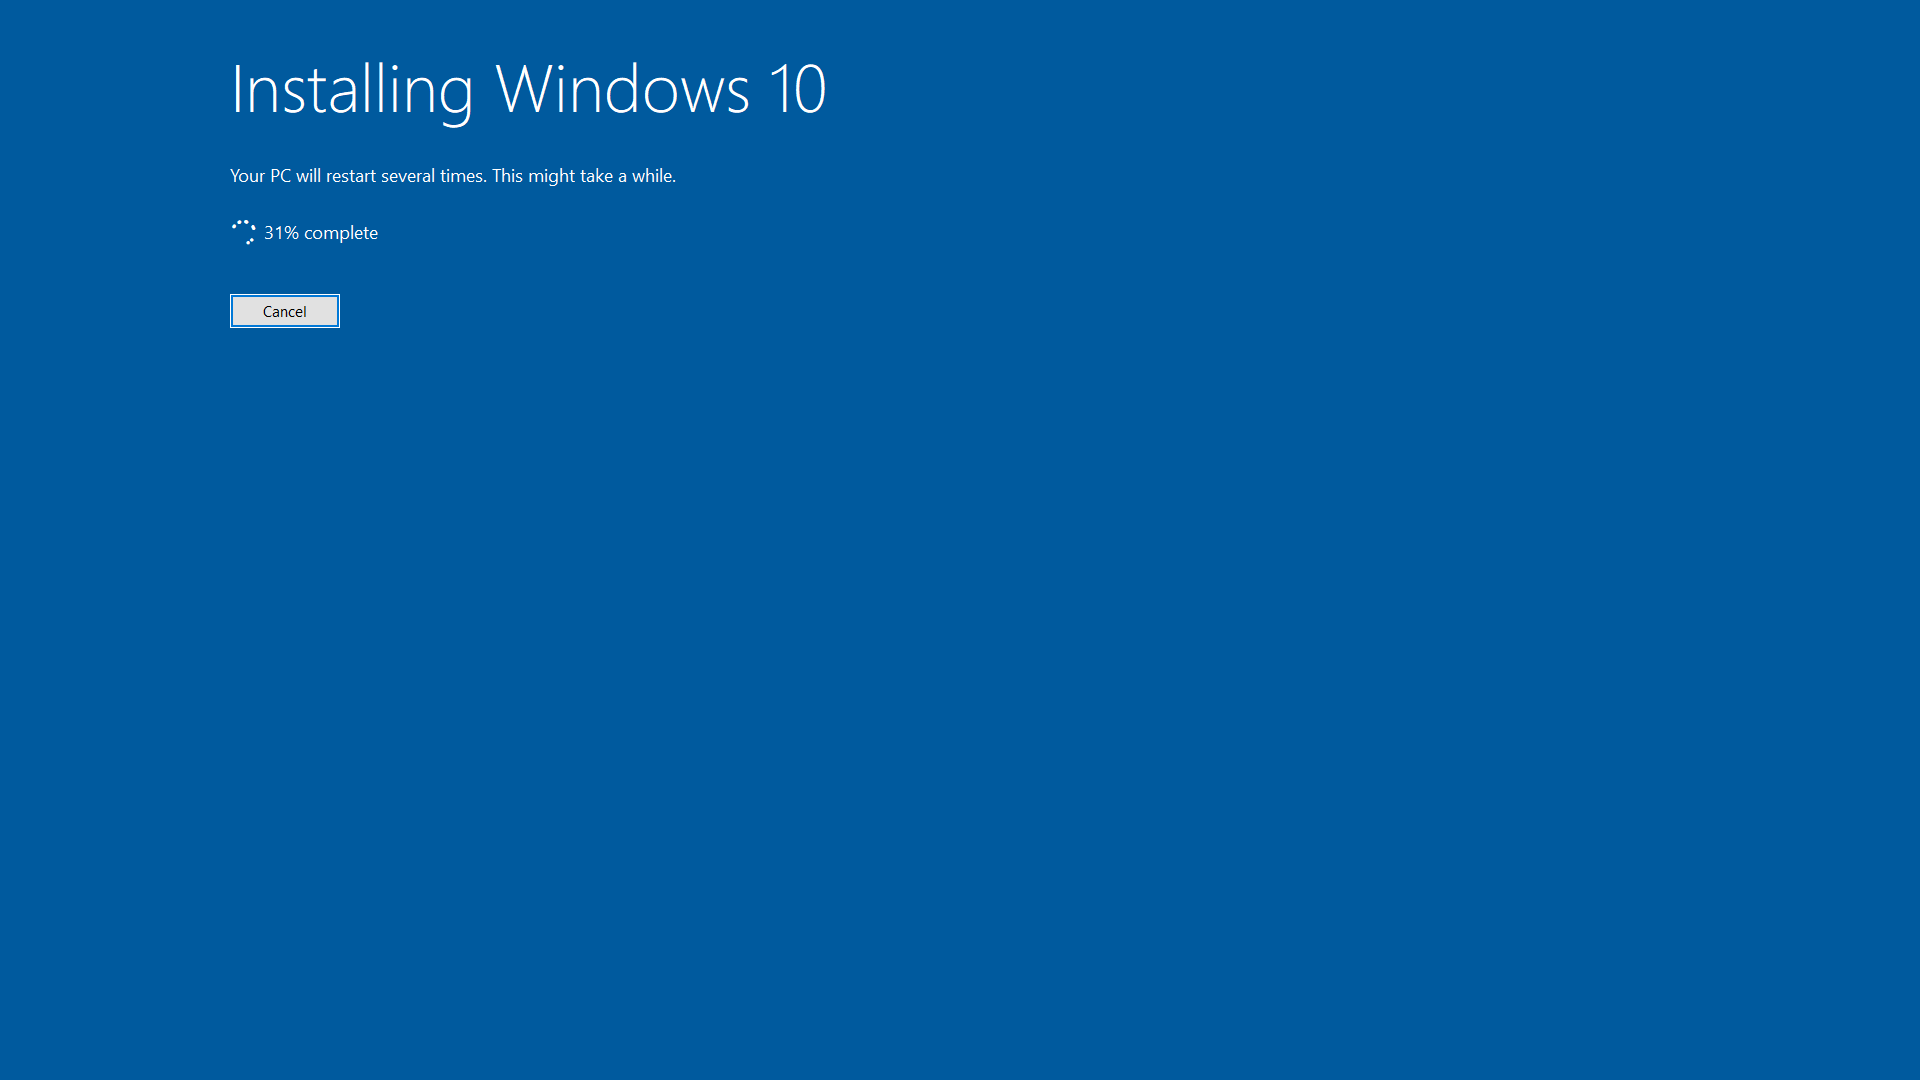 Windows 2004 update stuck at 31% 936e24f8-d03b-475a-886a-a2a8958cf771?upload=true.png